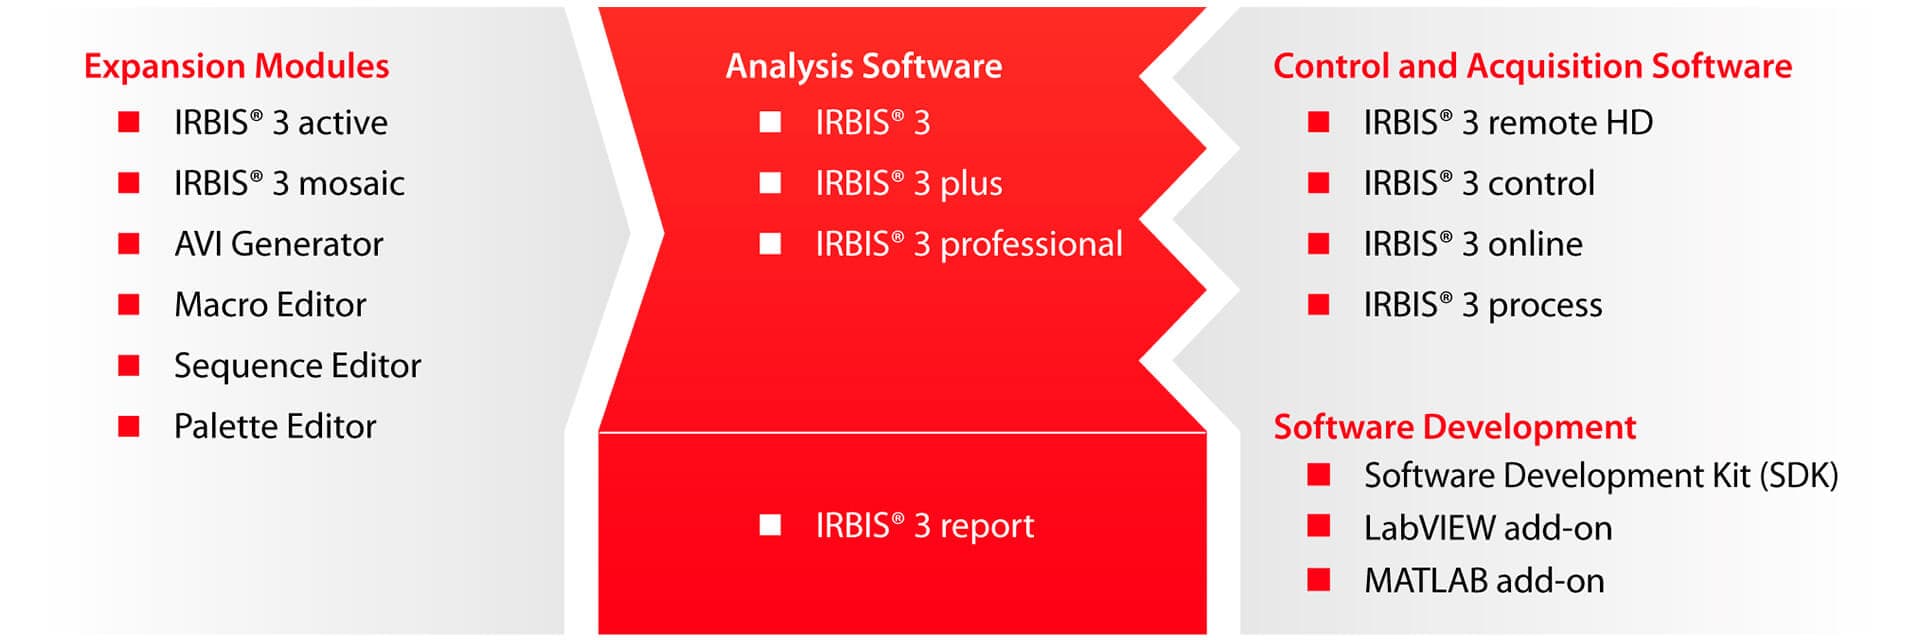 IRBIS® 3 analysis software